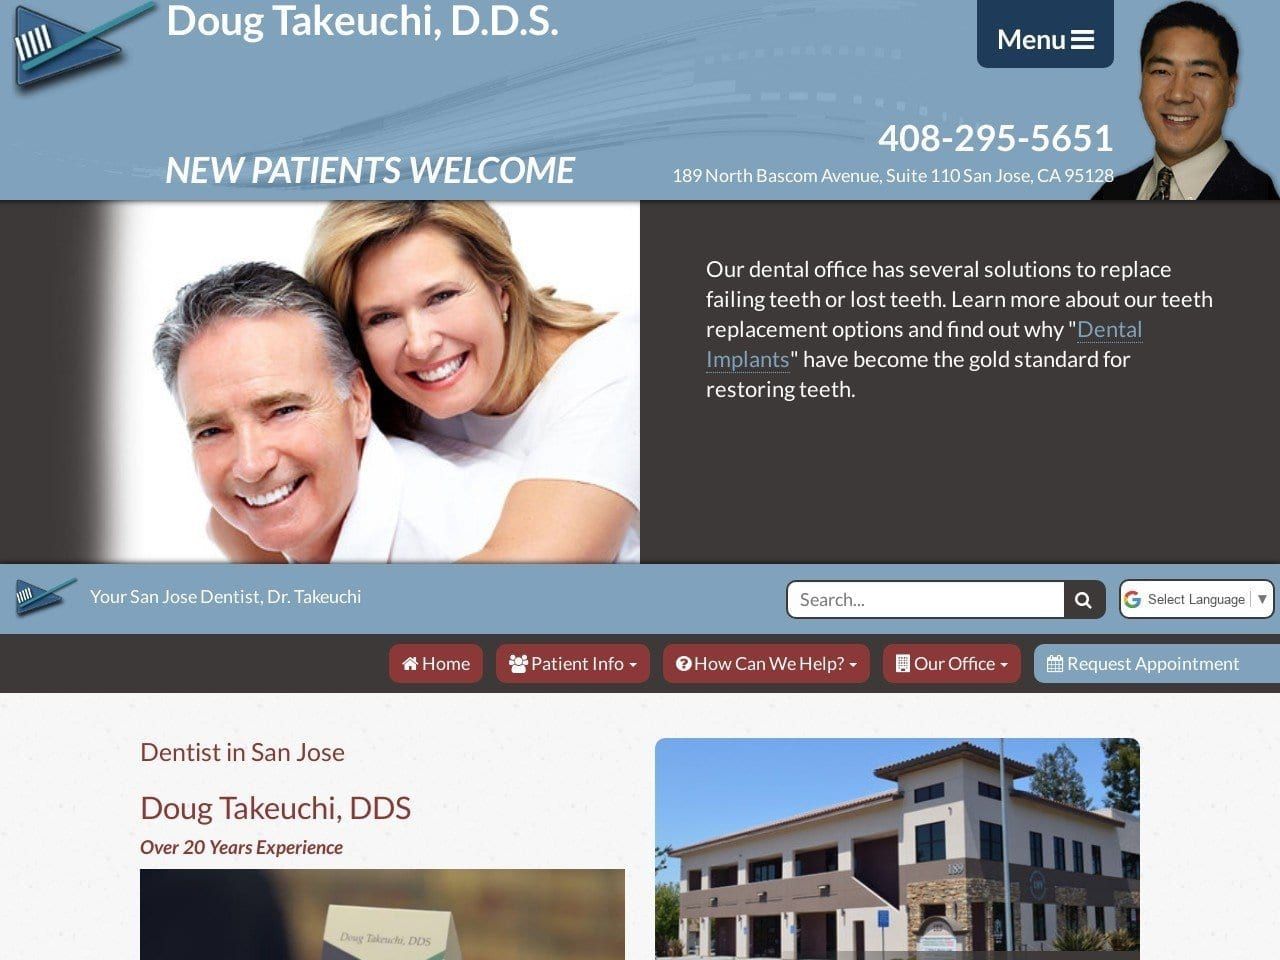 Doug Takeuchi DDS Website Screenshot from drtakeuchi.com